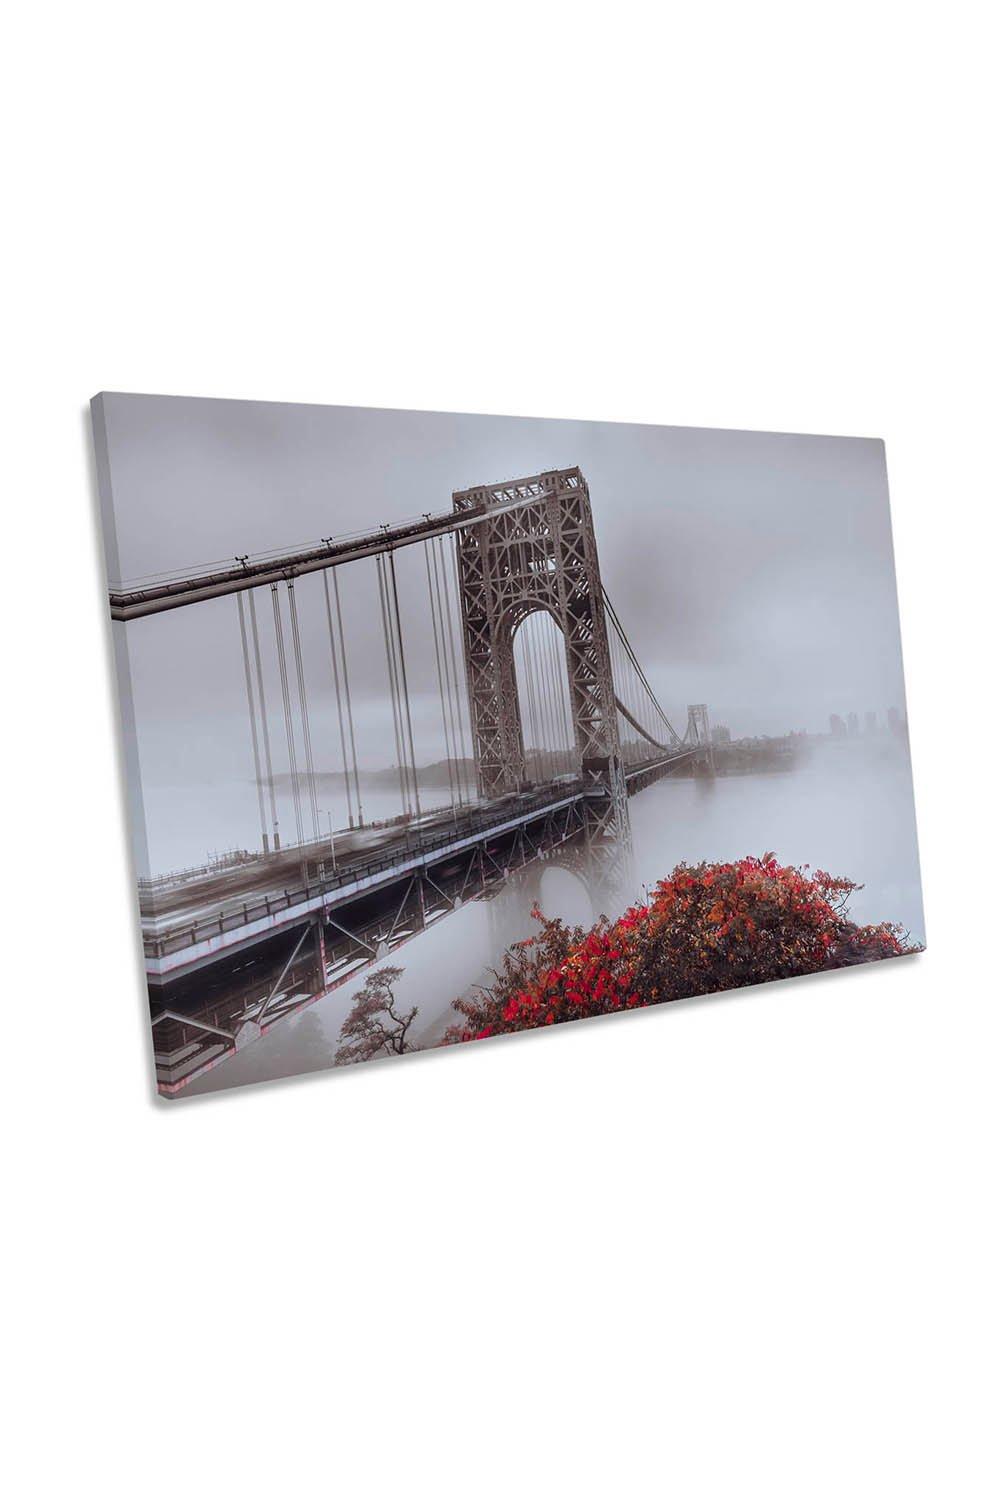 George Washington Bridge New York City Canvas Wall Art Picture Print